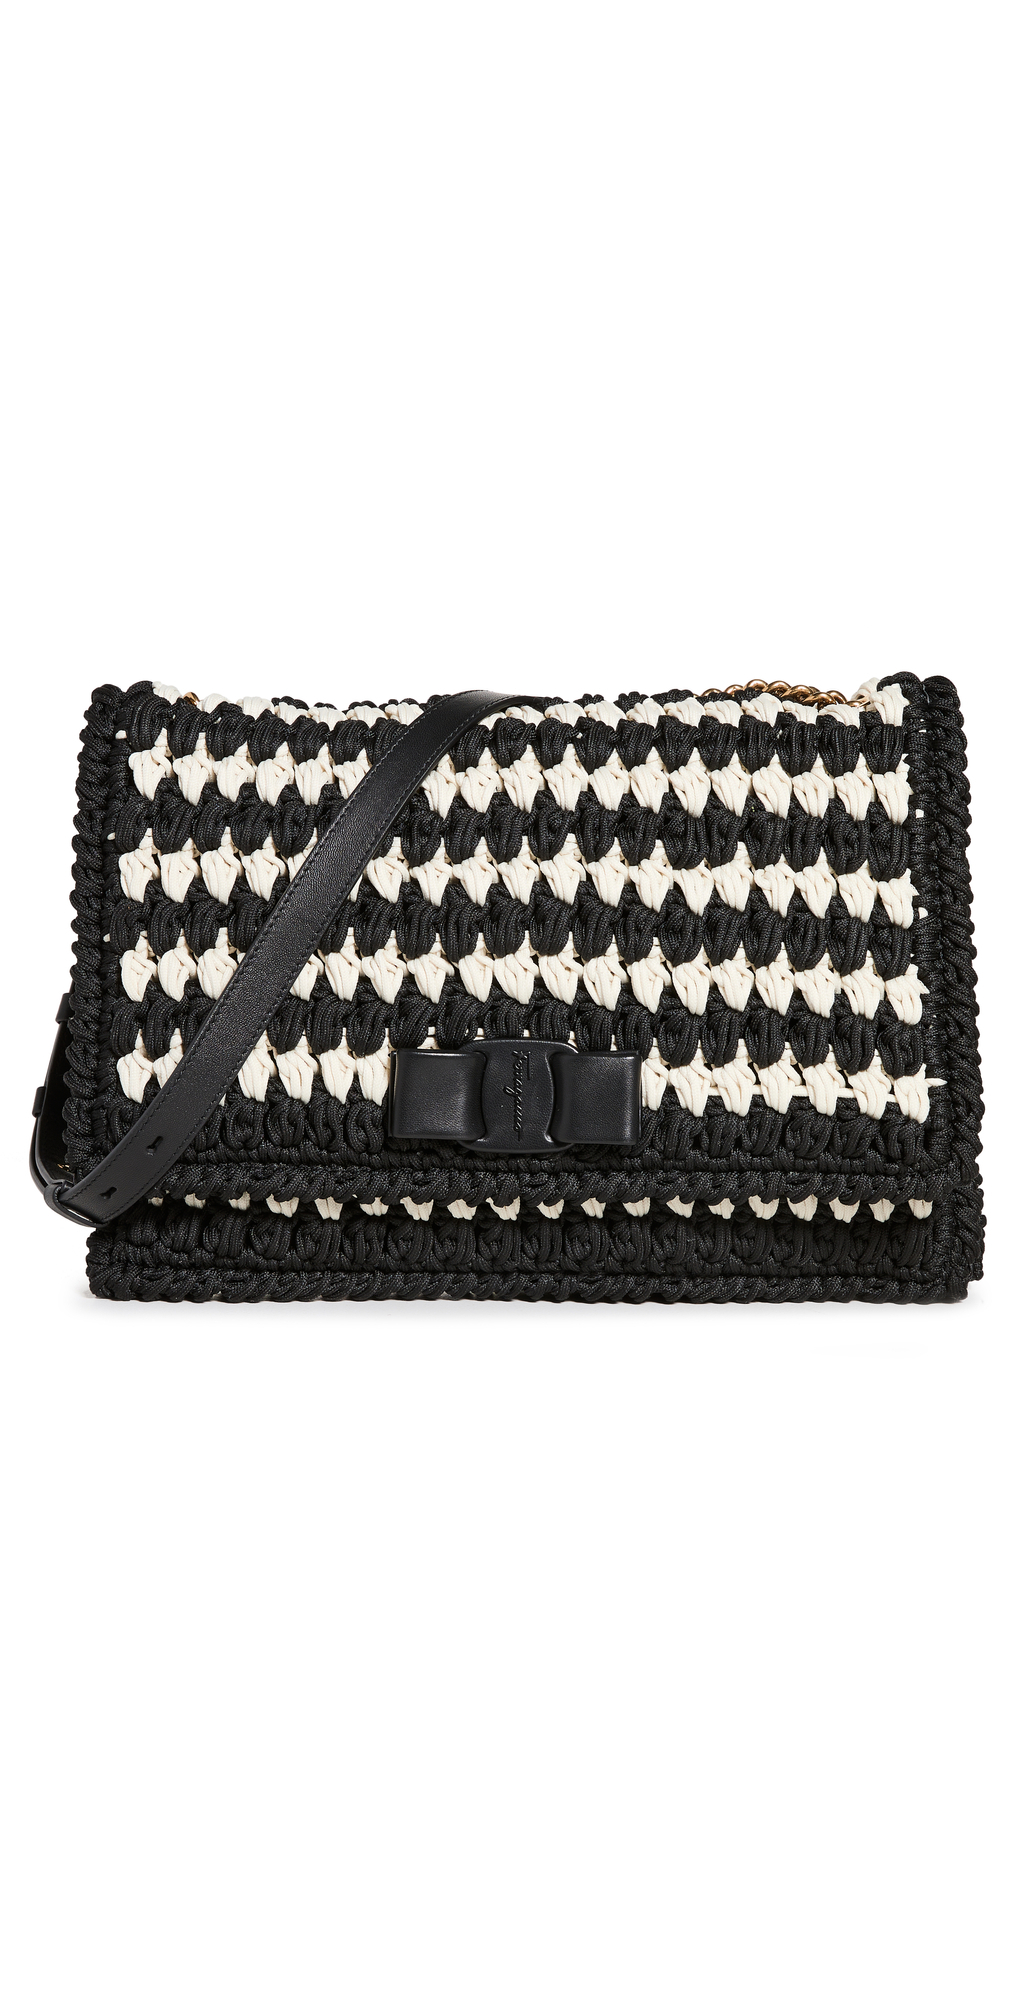 Salvatore Ferragamo Viva Crochet Flap Bag in nero